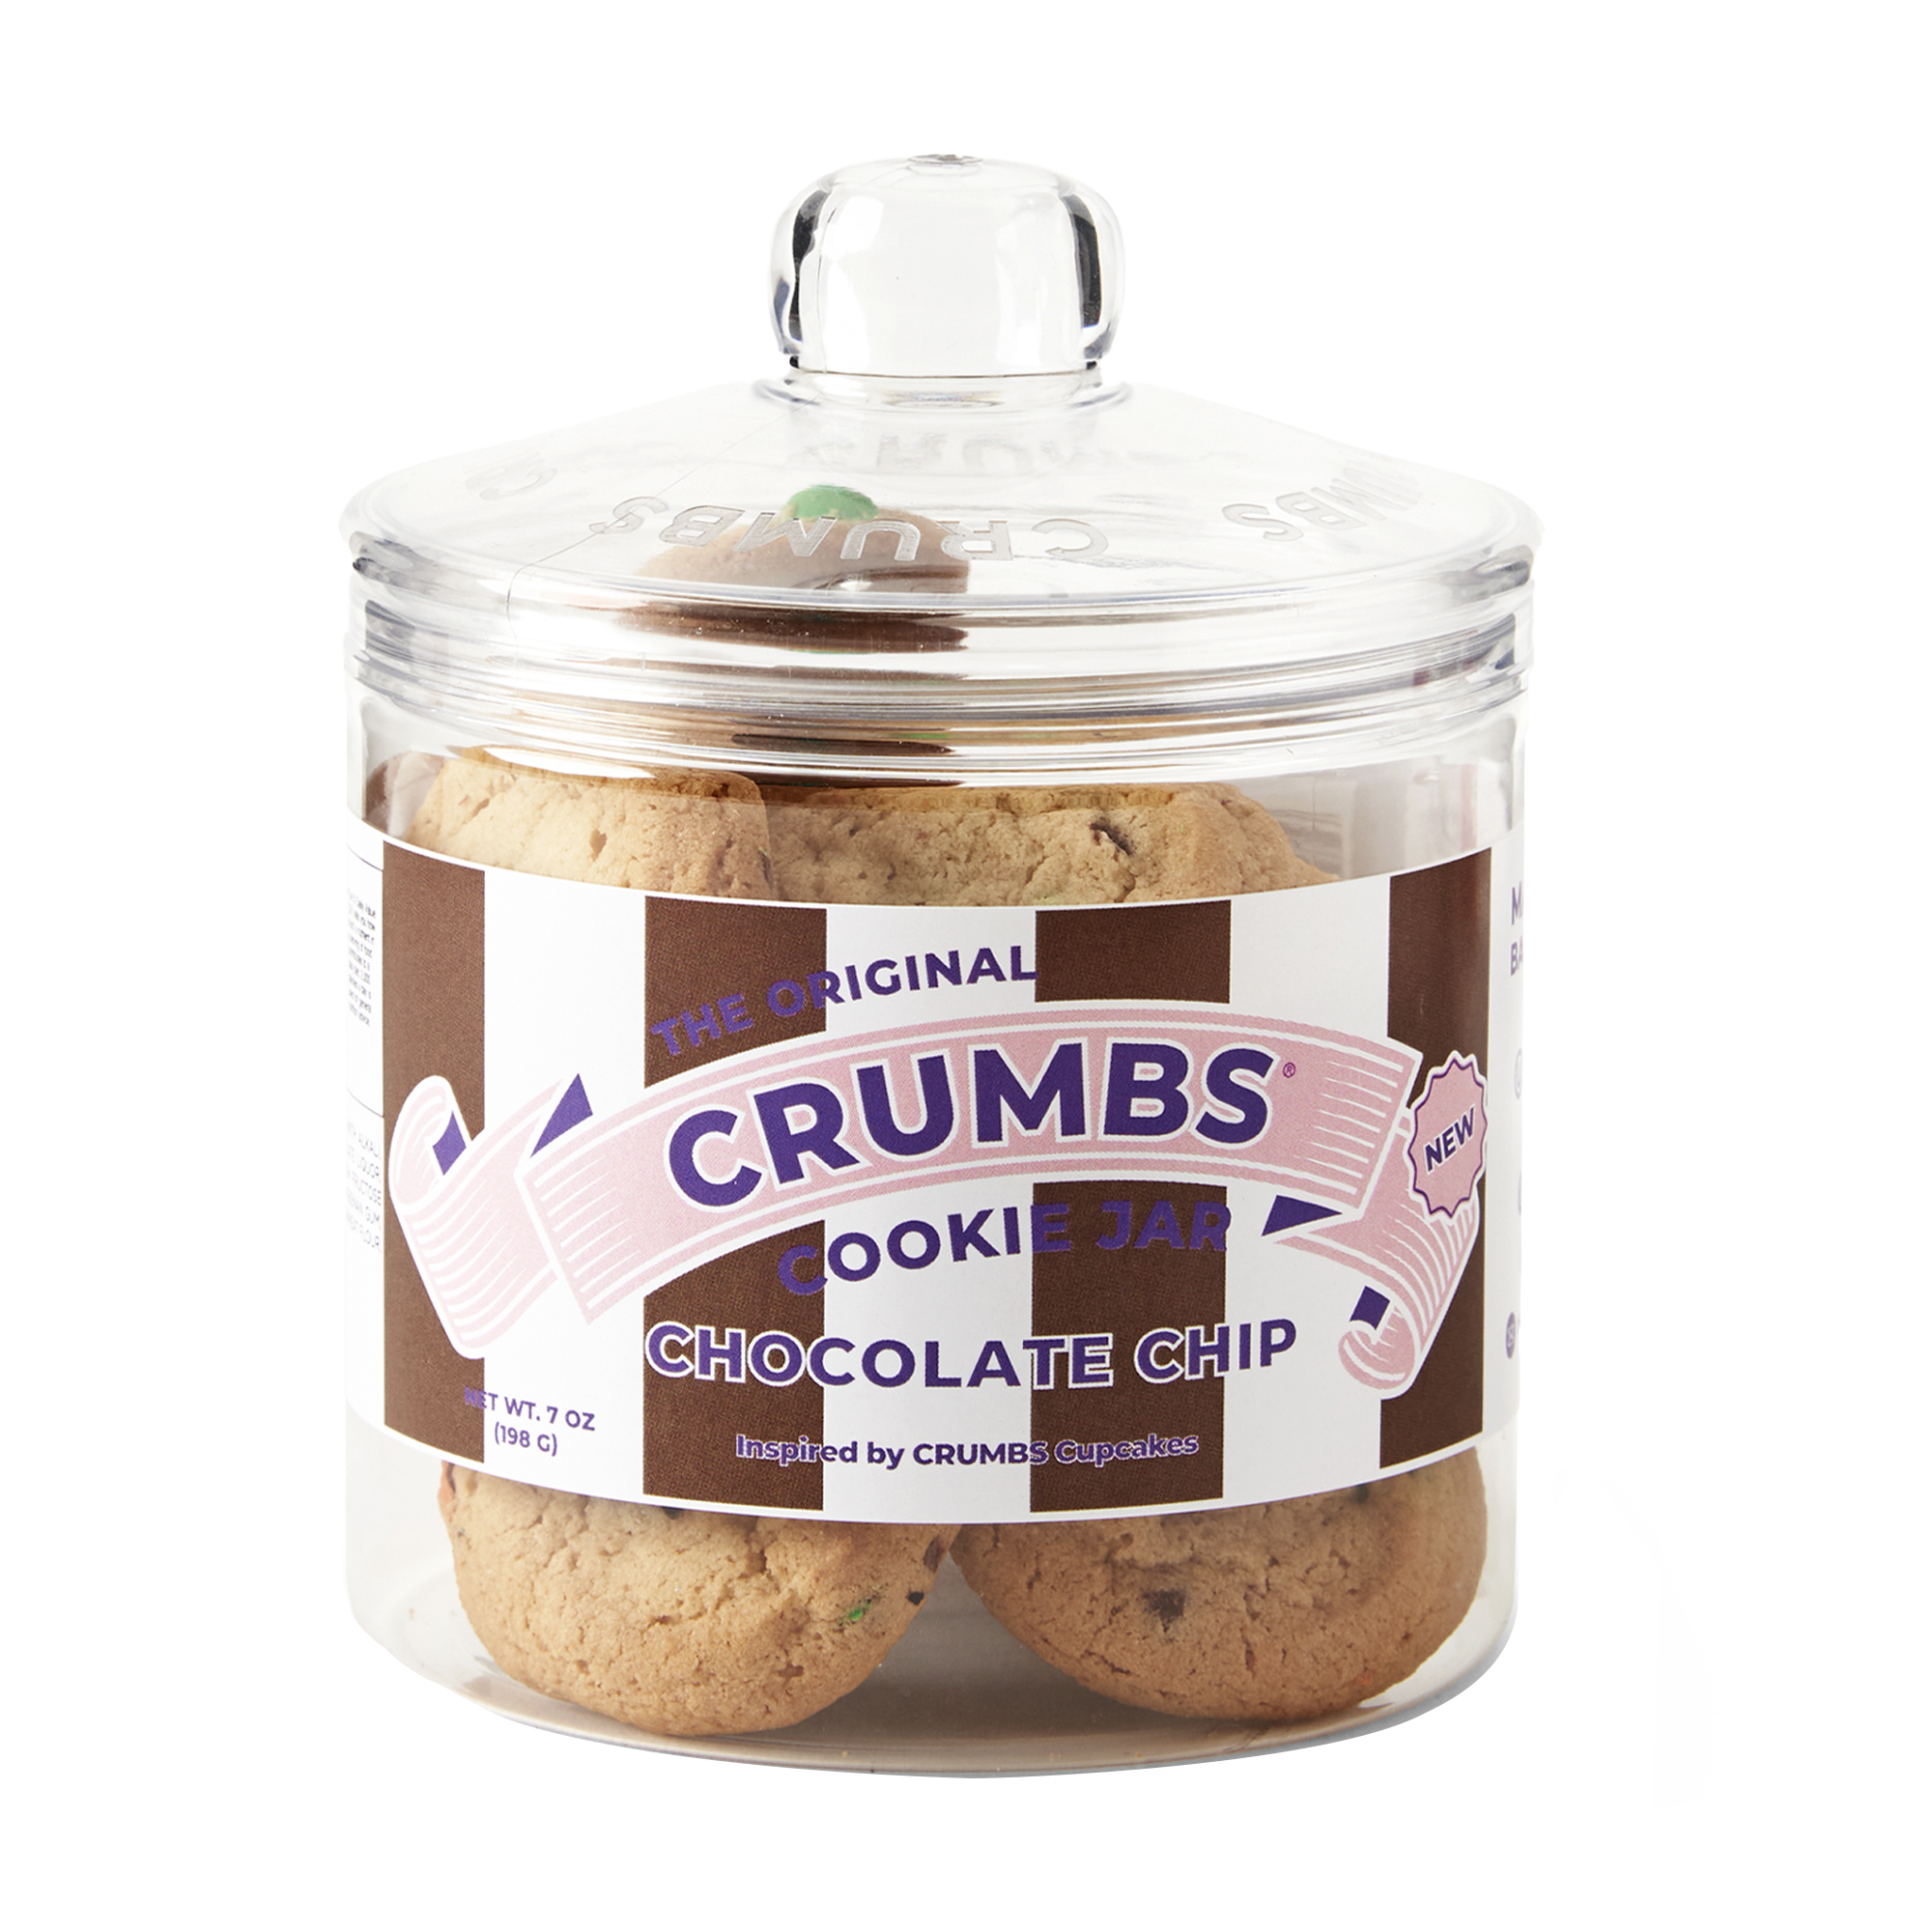 Cotton Candy Cookie Jar 5-Pack – Original Crumbs